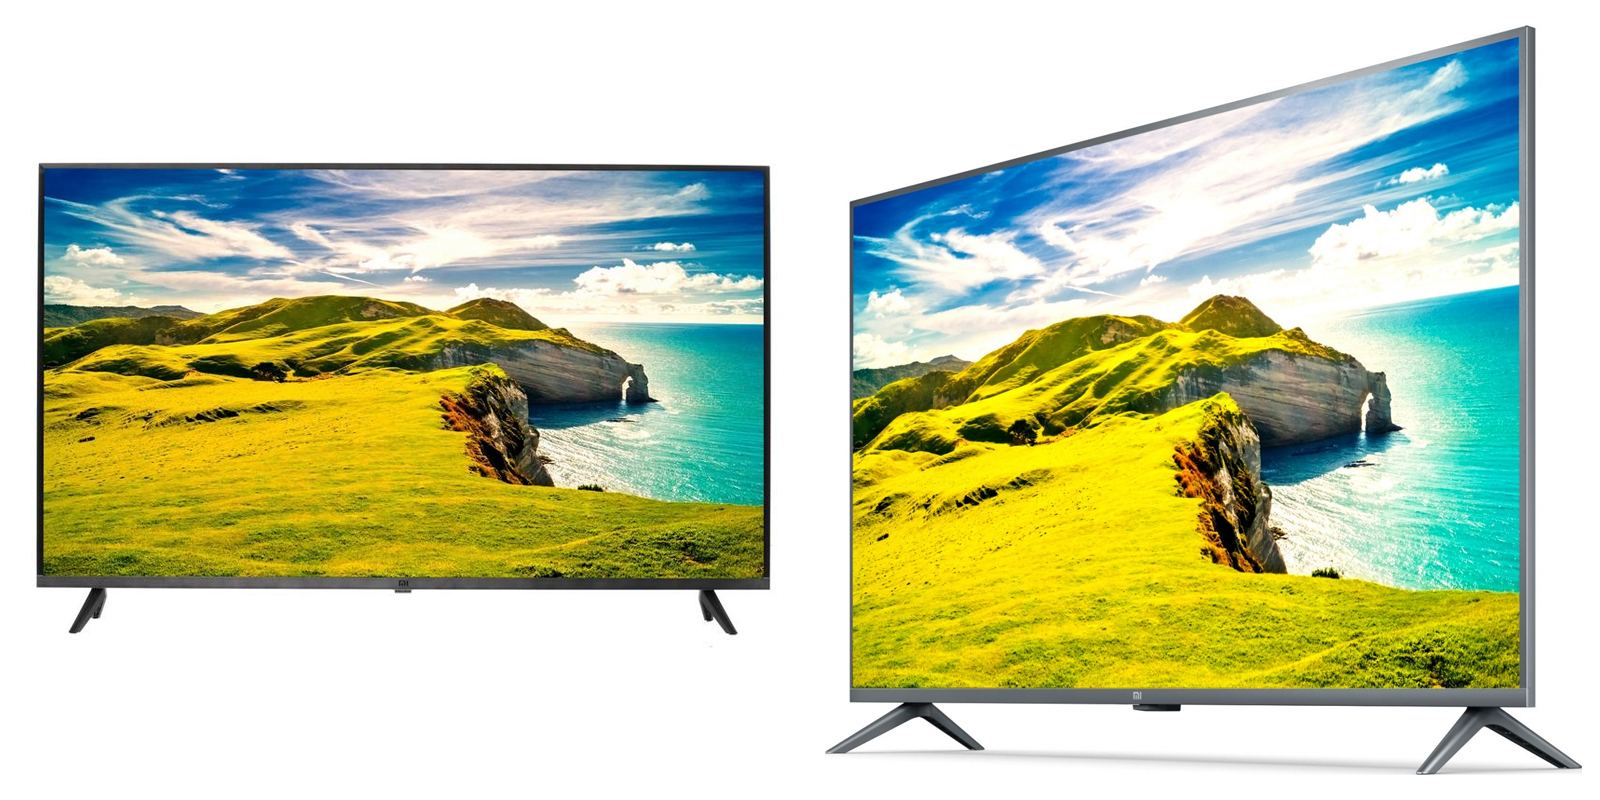 Озон телевизоры смарт тв. Mi TV 4s 55 vs Samsung 7100. Озон телевизоры. На Озон телевизоры 43 дюйма. Телевизор на Озон 43 дюйма в черную пятницу.